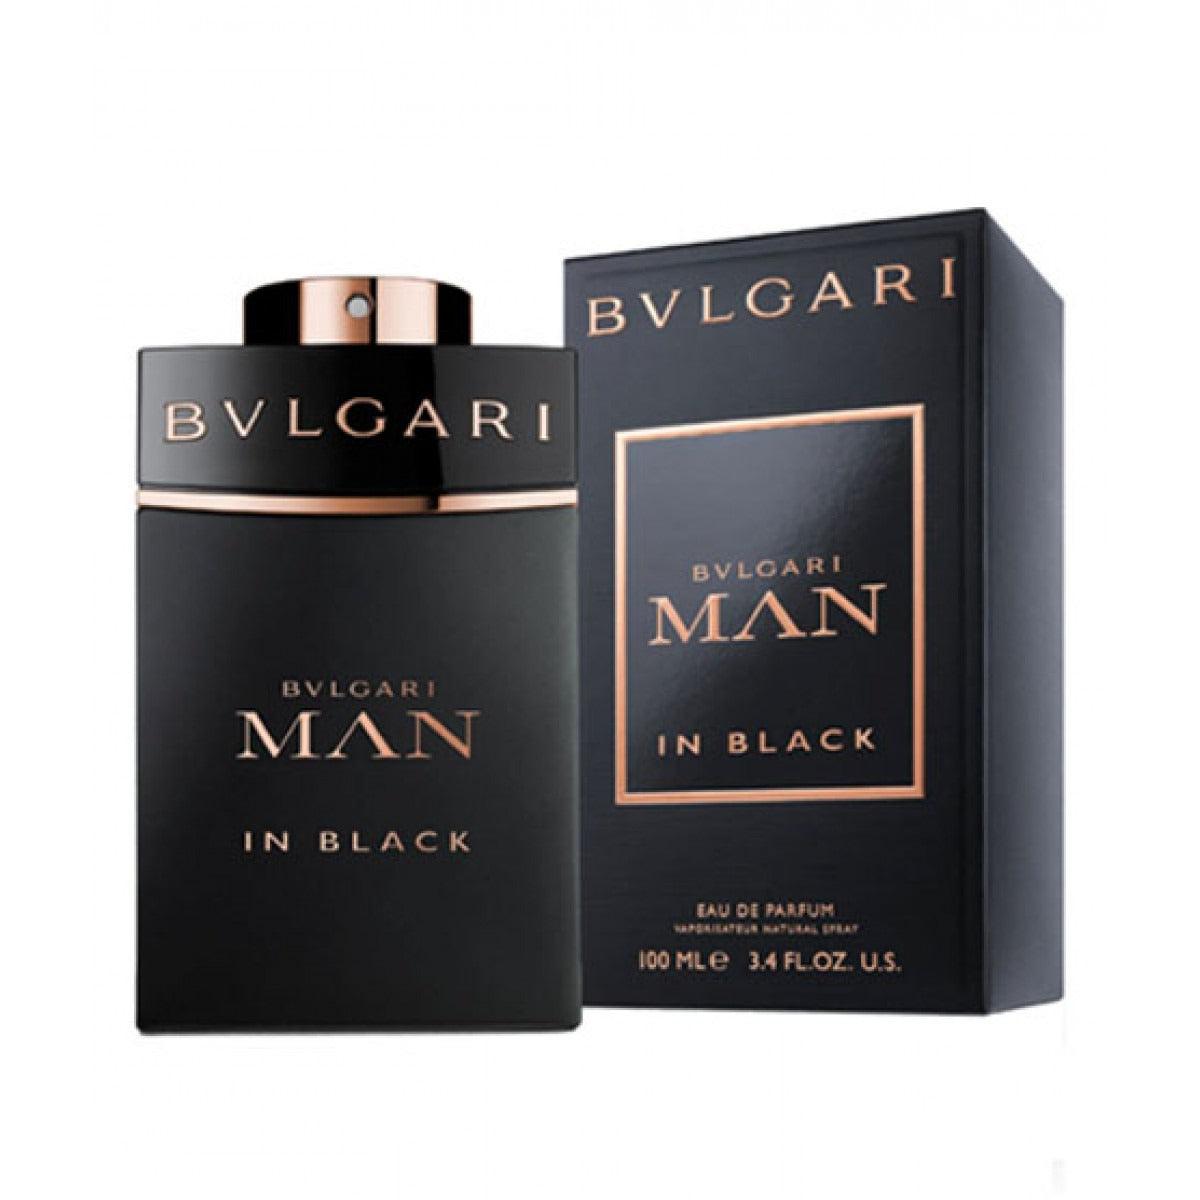 Bvlgari Man in Black EDP Perfume For Men 100ML - Obeezi.com